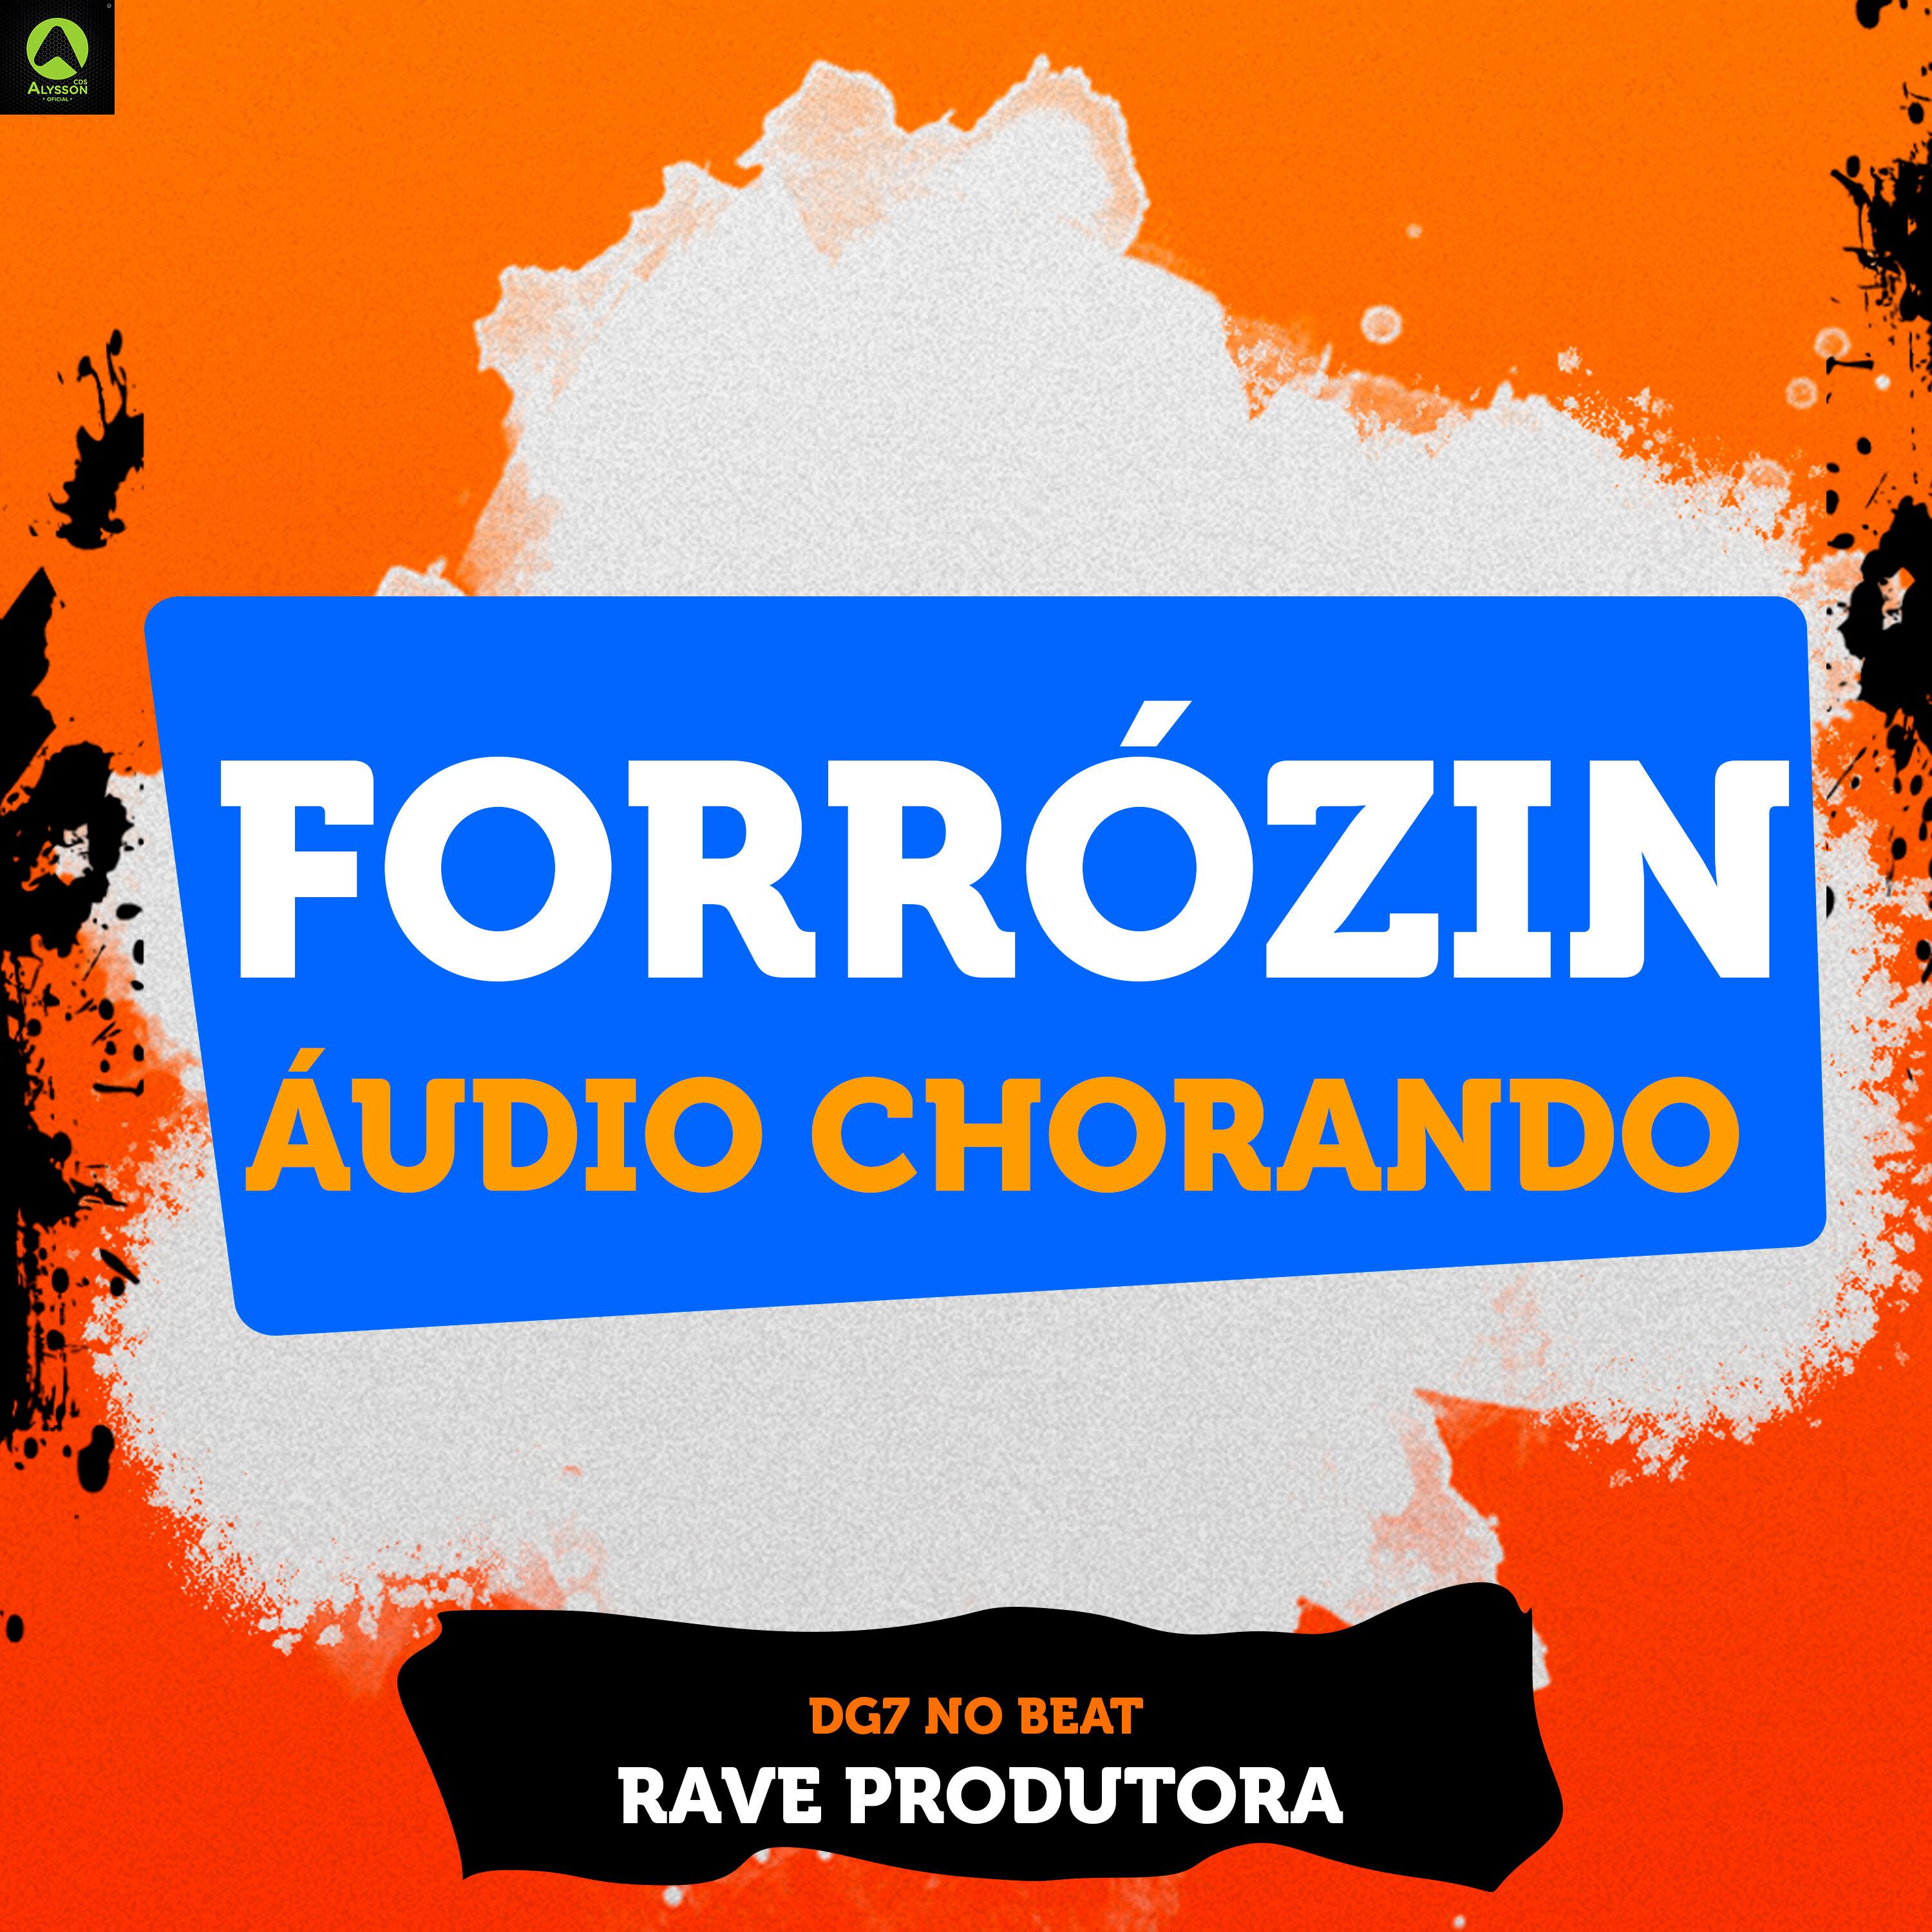 Rave Produtora - Forrózin Áudio Chorando